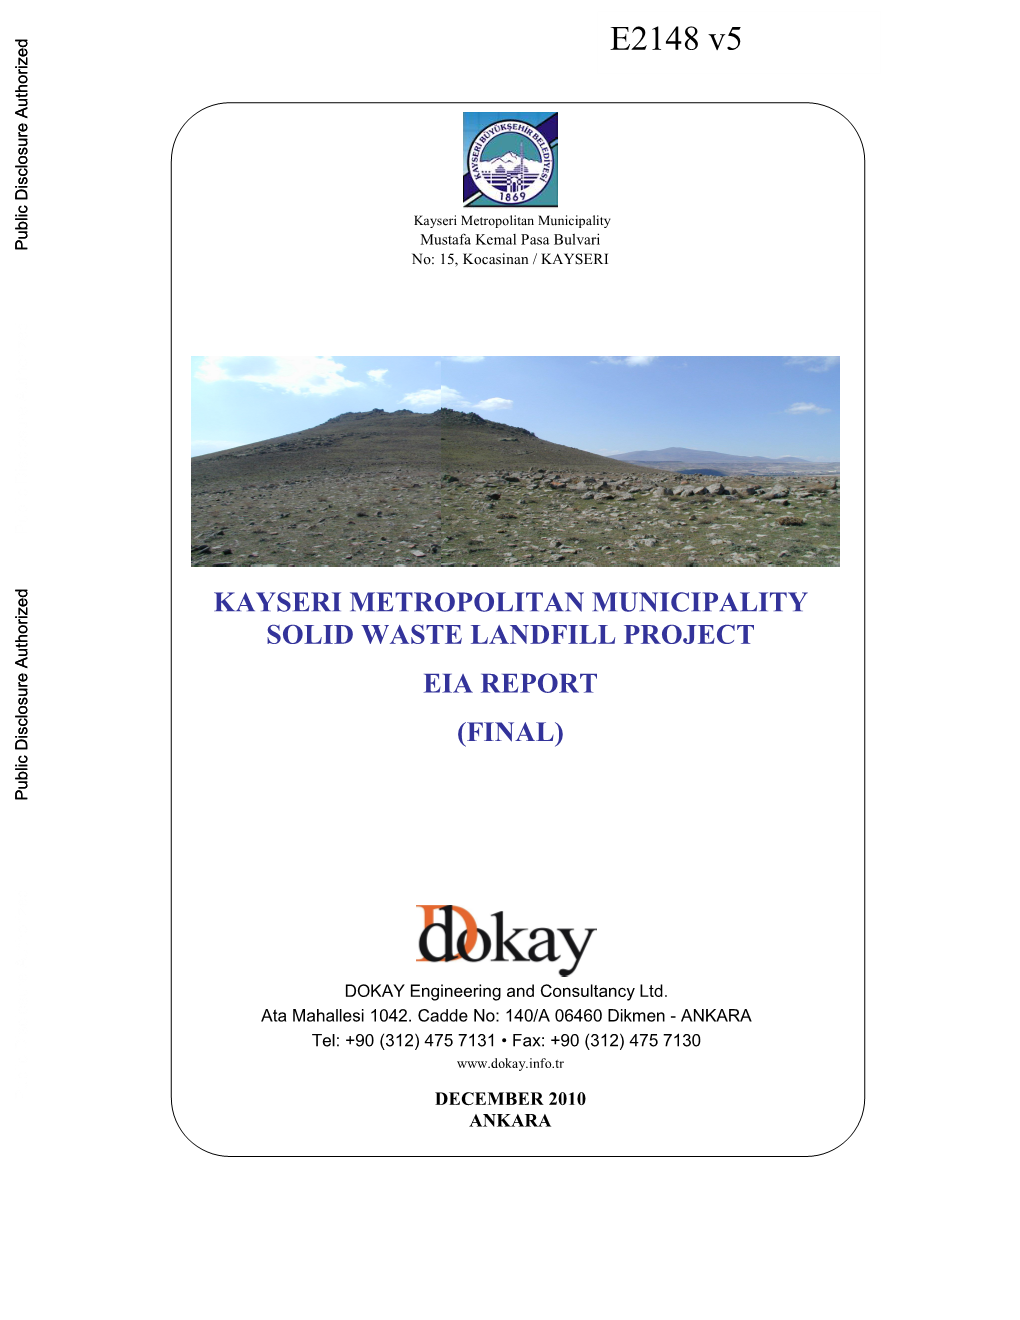 KAYSERI METROPOLITAN MUNICIPALITY SOLID WASTE LANDFILL PROJECT EIA REPORT (FINAL) Public Disclosure Authorized